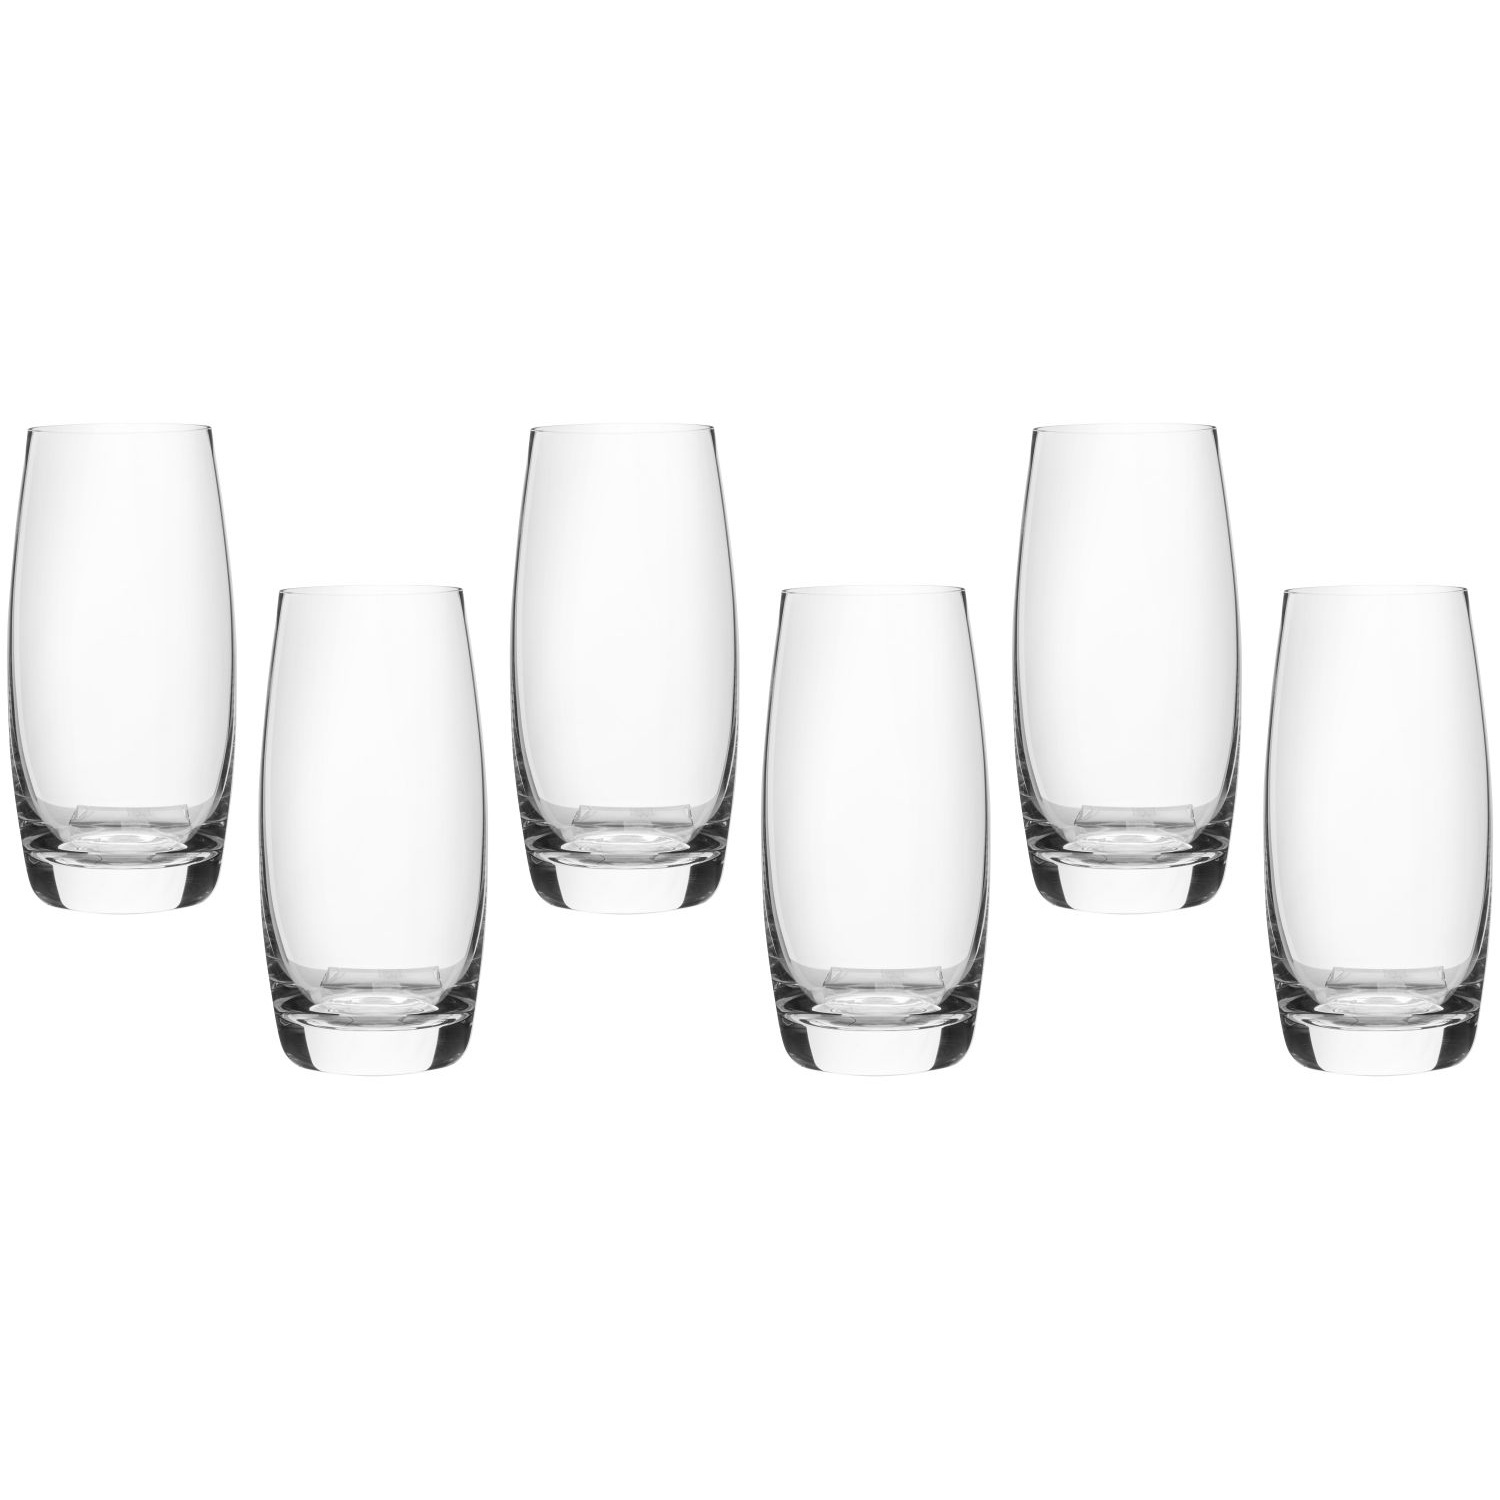 Набор стаканов Maxwell & Williams Cosmopolitan для воды 0,4 л набор стаканов maxwell